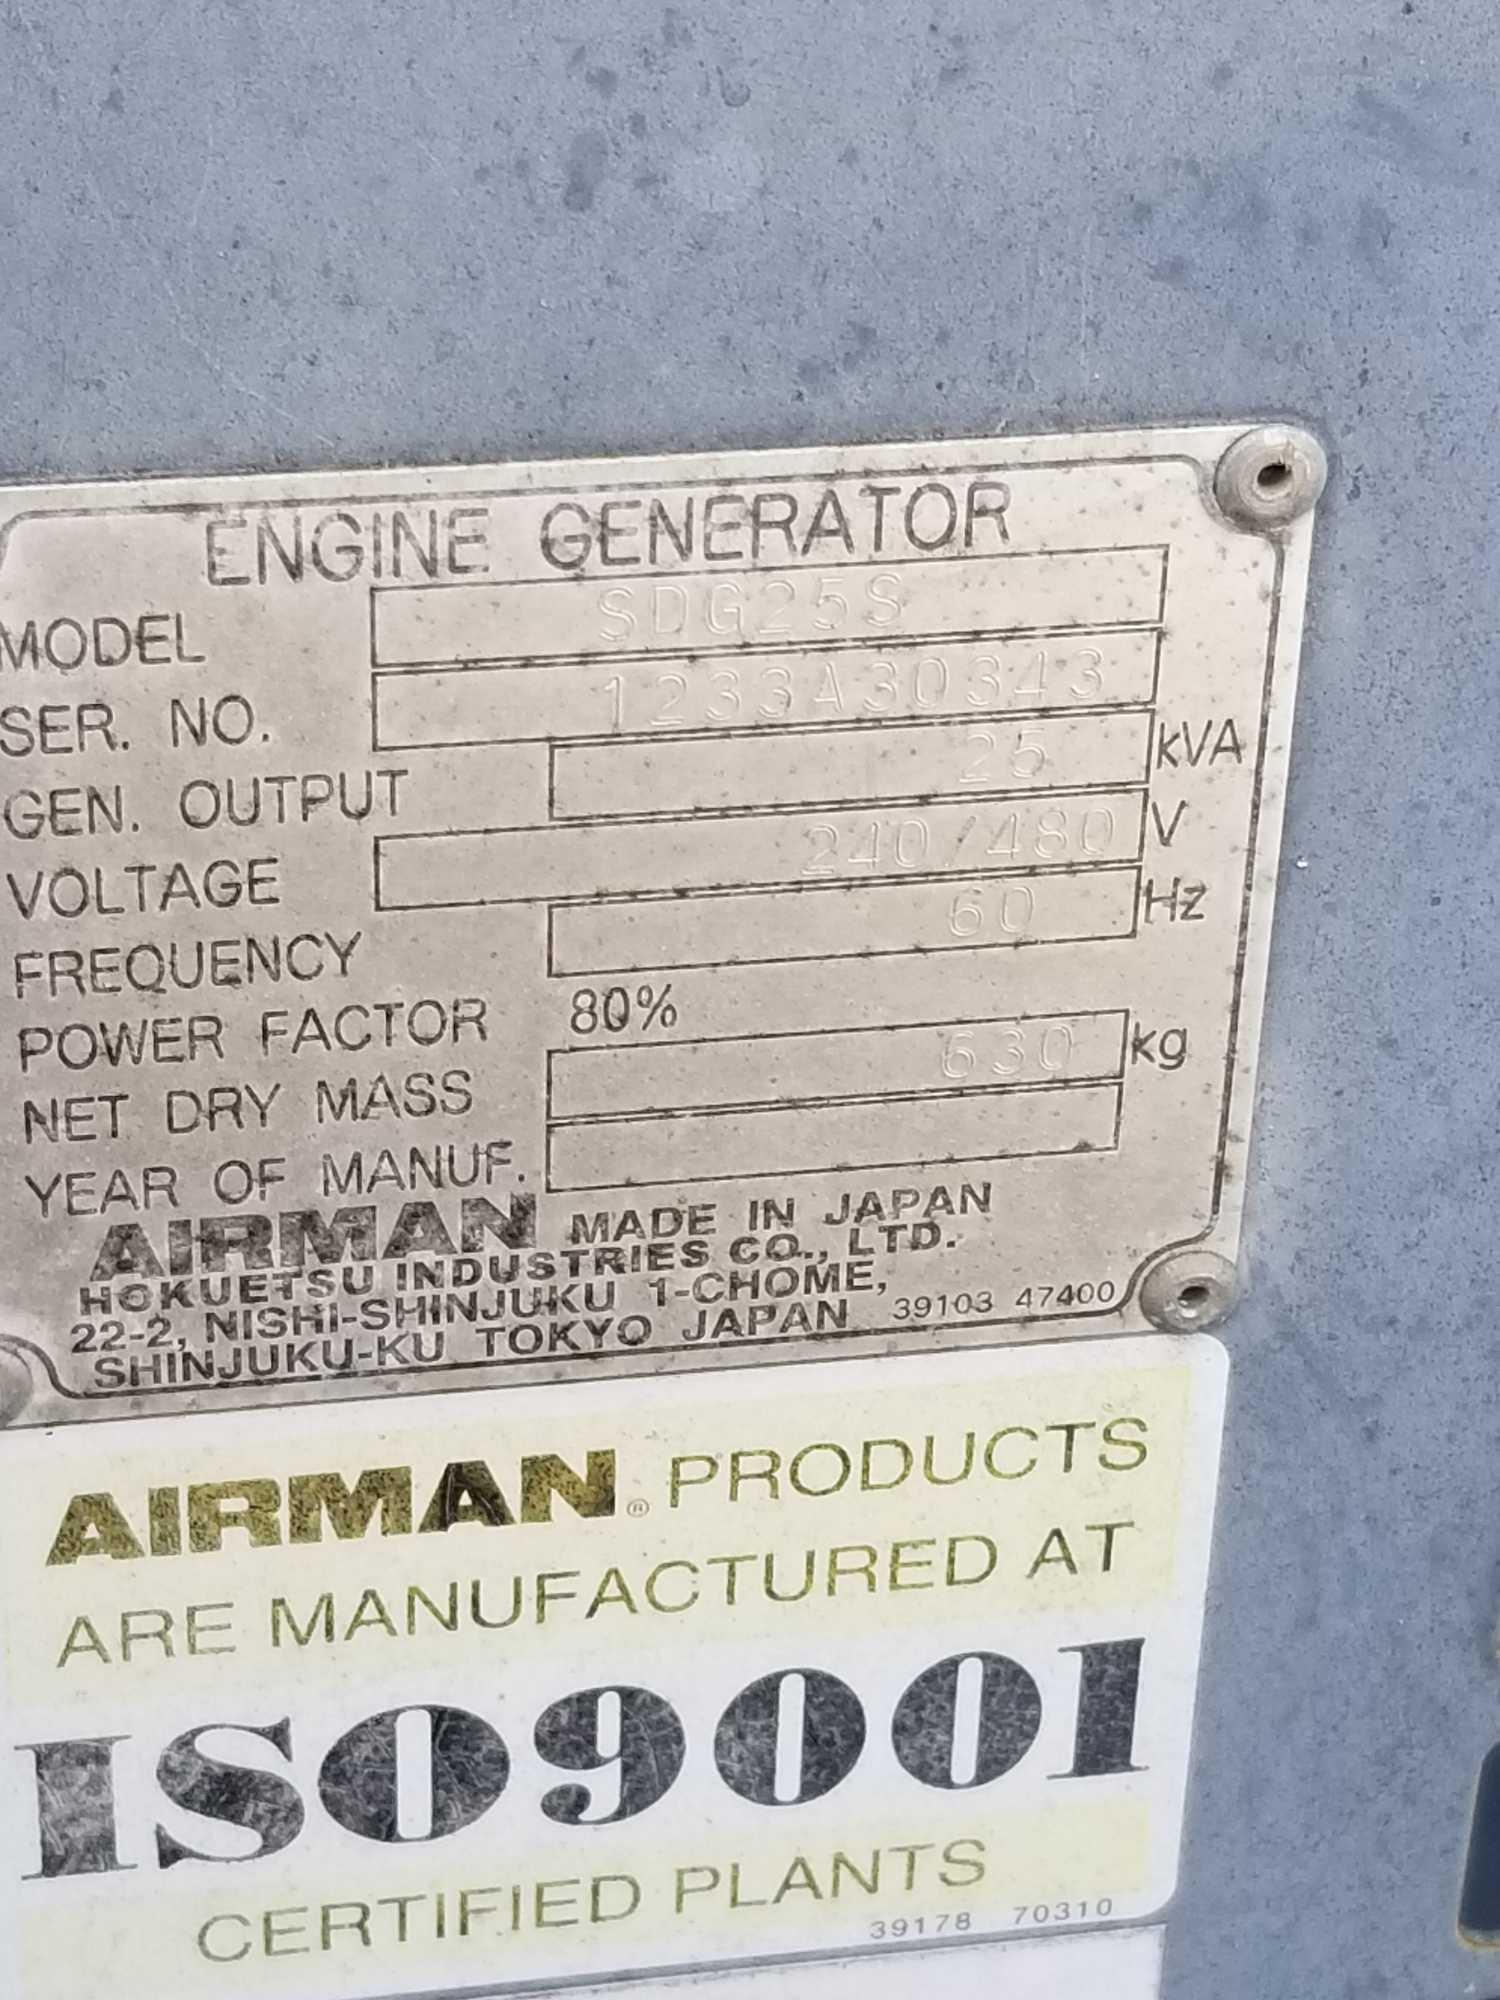 Airman 25 Portable Generator SDG25S no engine